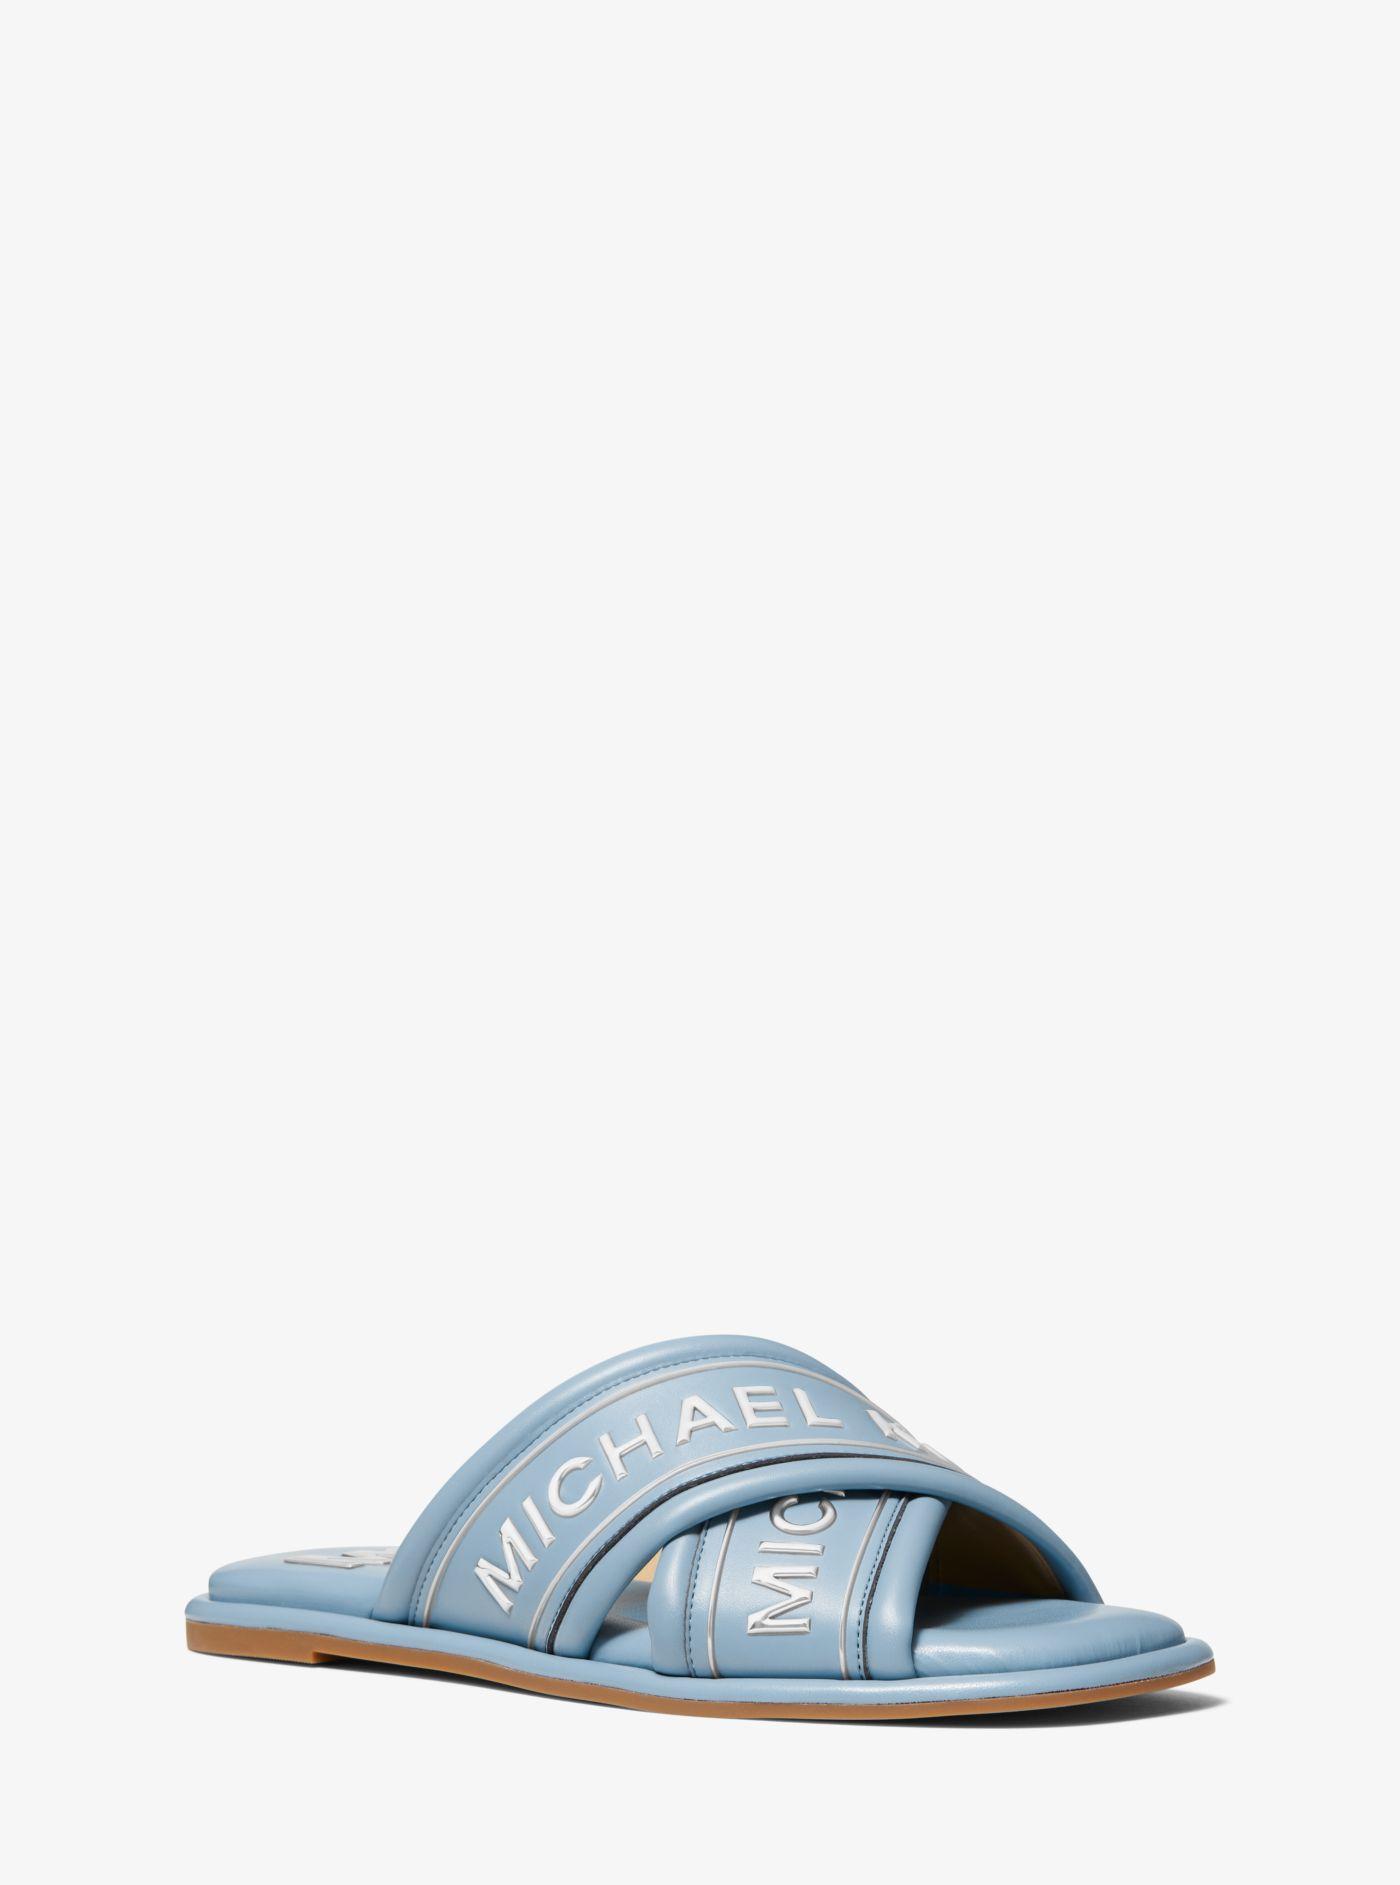 Michael Kors Gideon Embellished Faux Leather Slide Sandal in Blue | Lyst